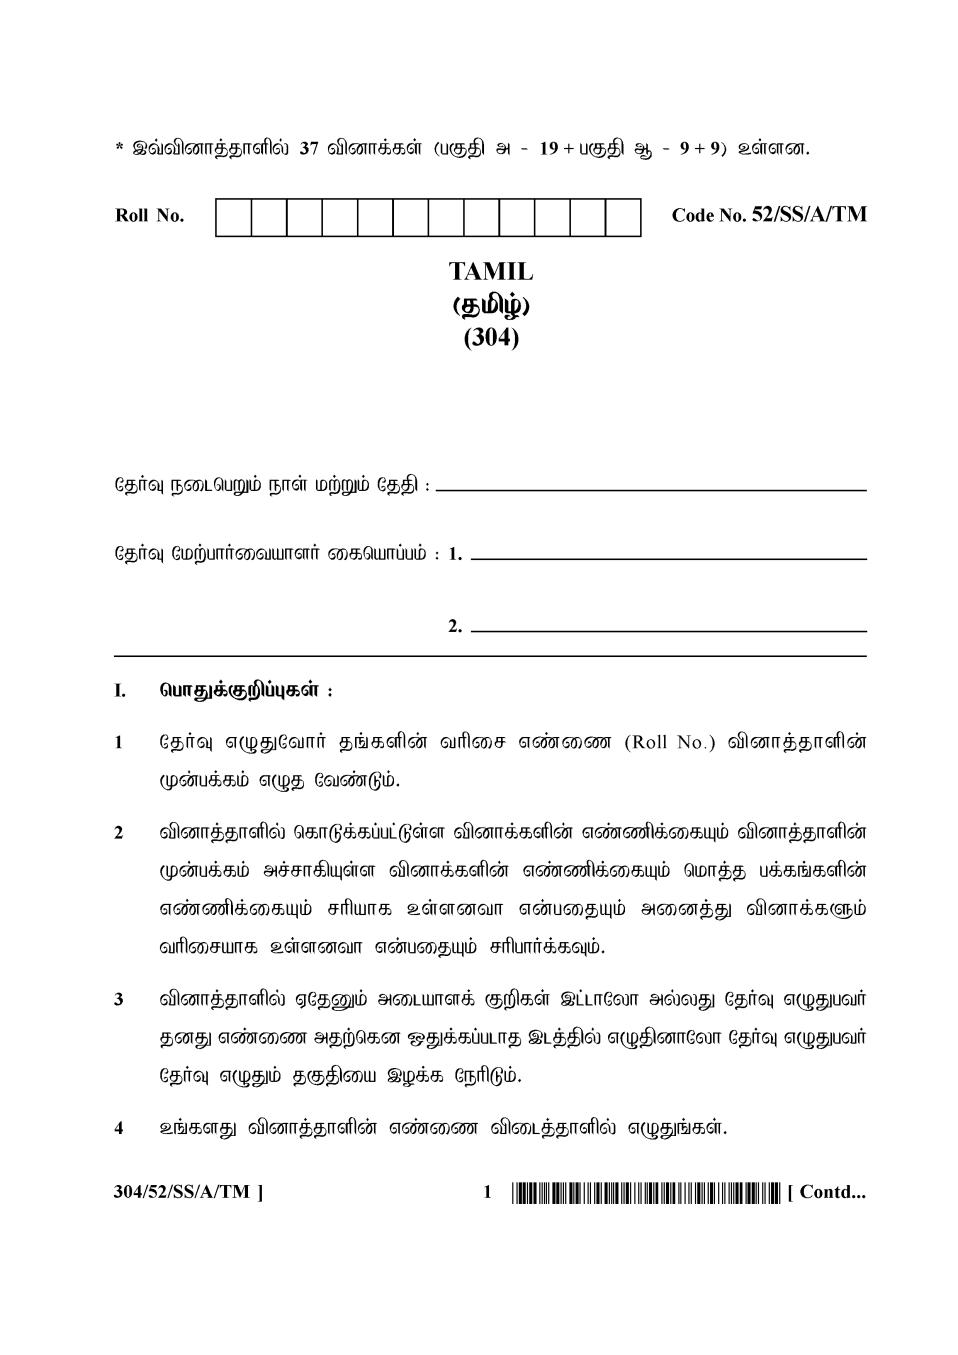 NIOS Class 12 Question Paper Apr 2016 - Tamil - Page 1